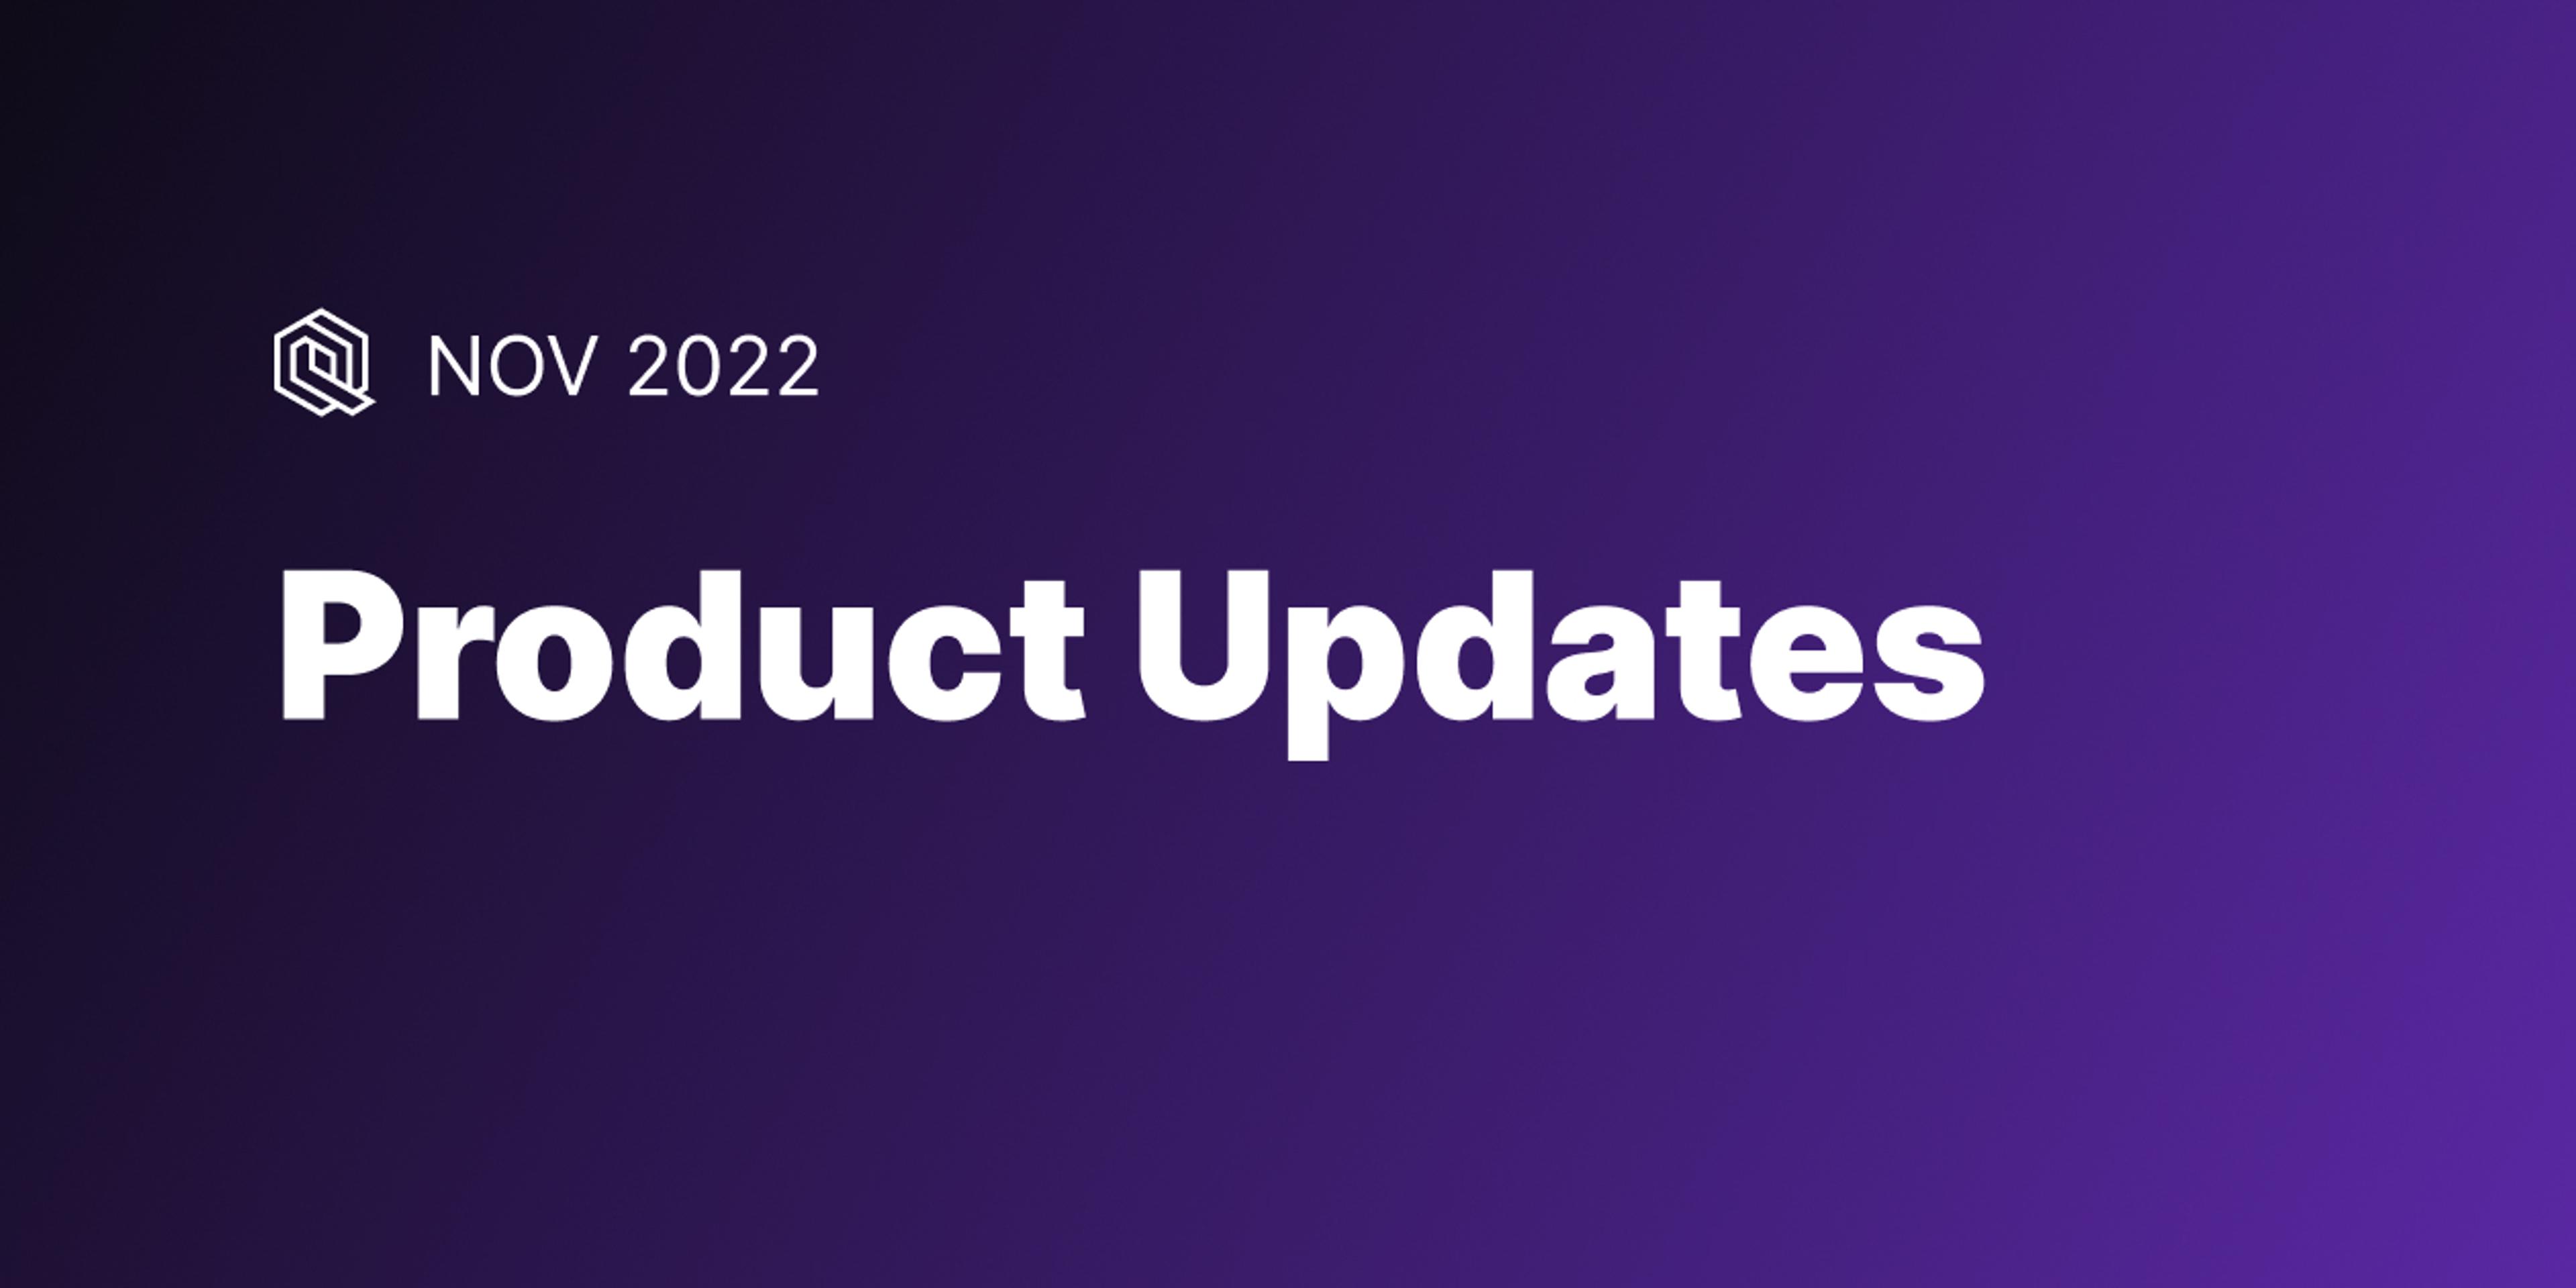 November 2022 Product Updates Post Image